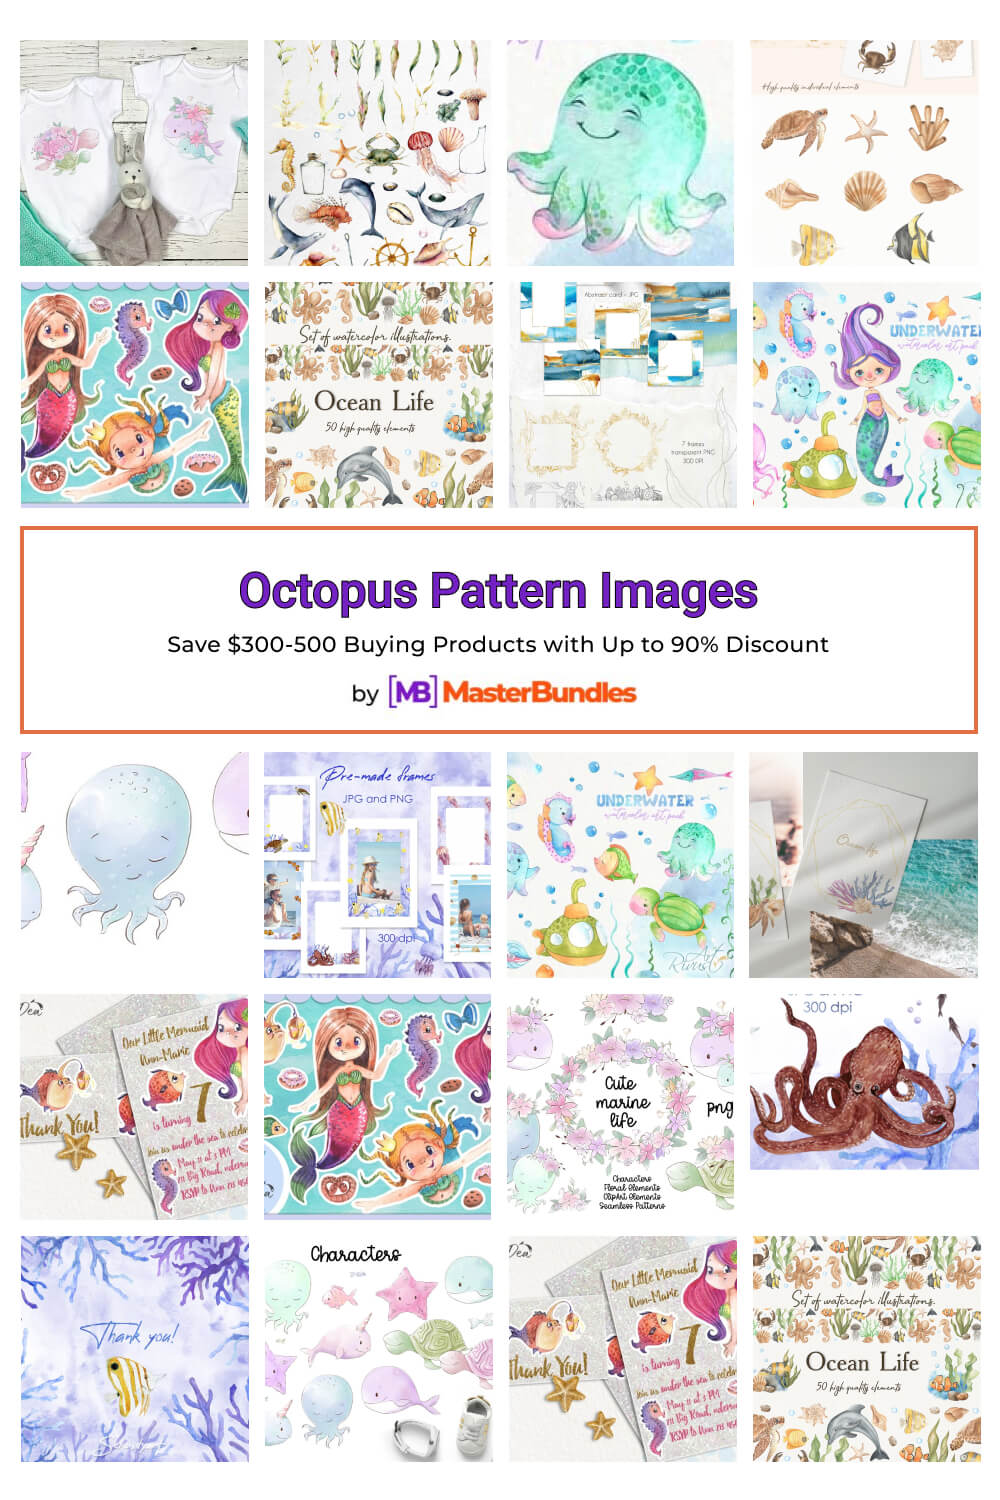 octopus pattern images pinterest image.